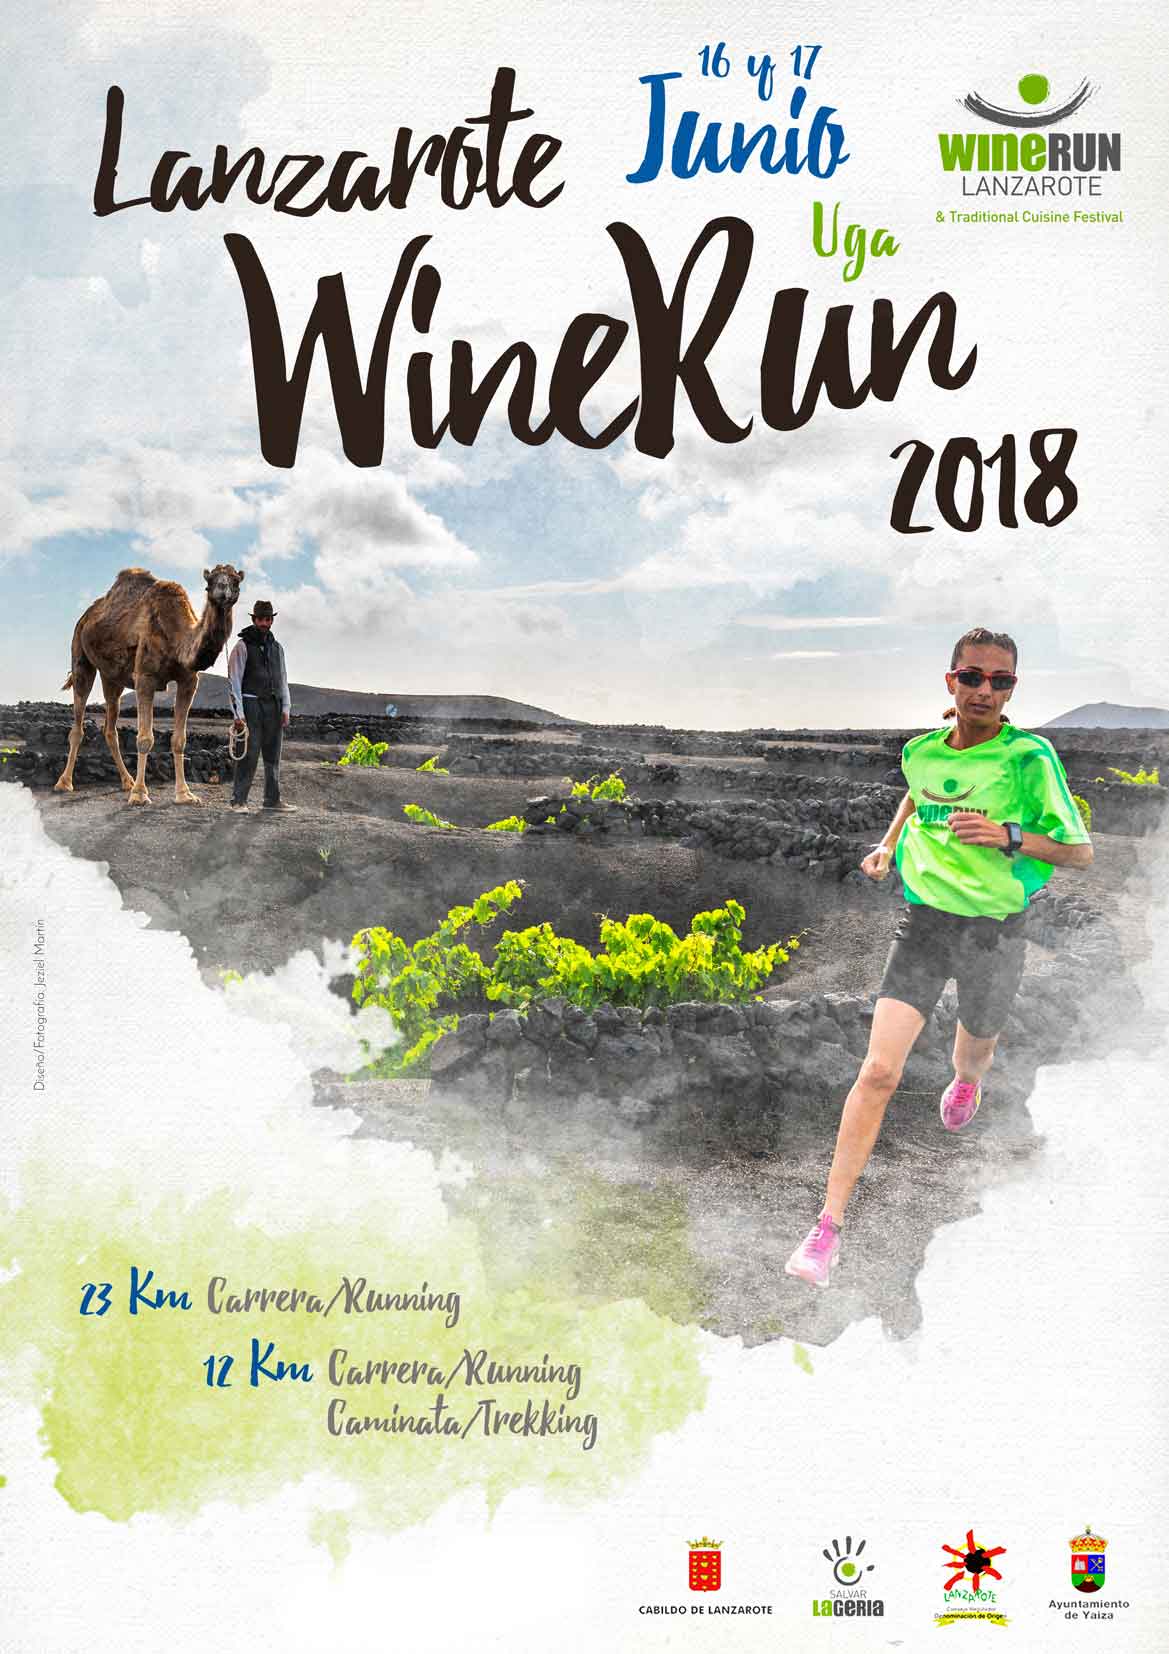 Wine Run Lanzarote 2018